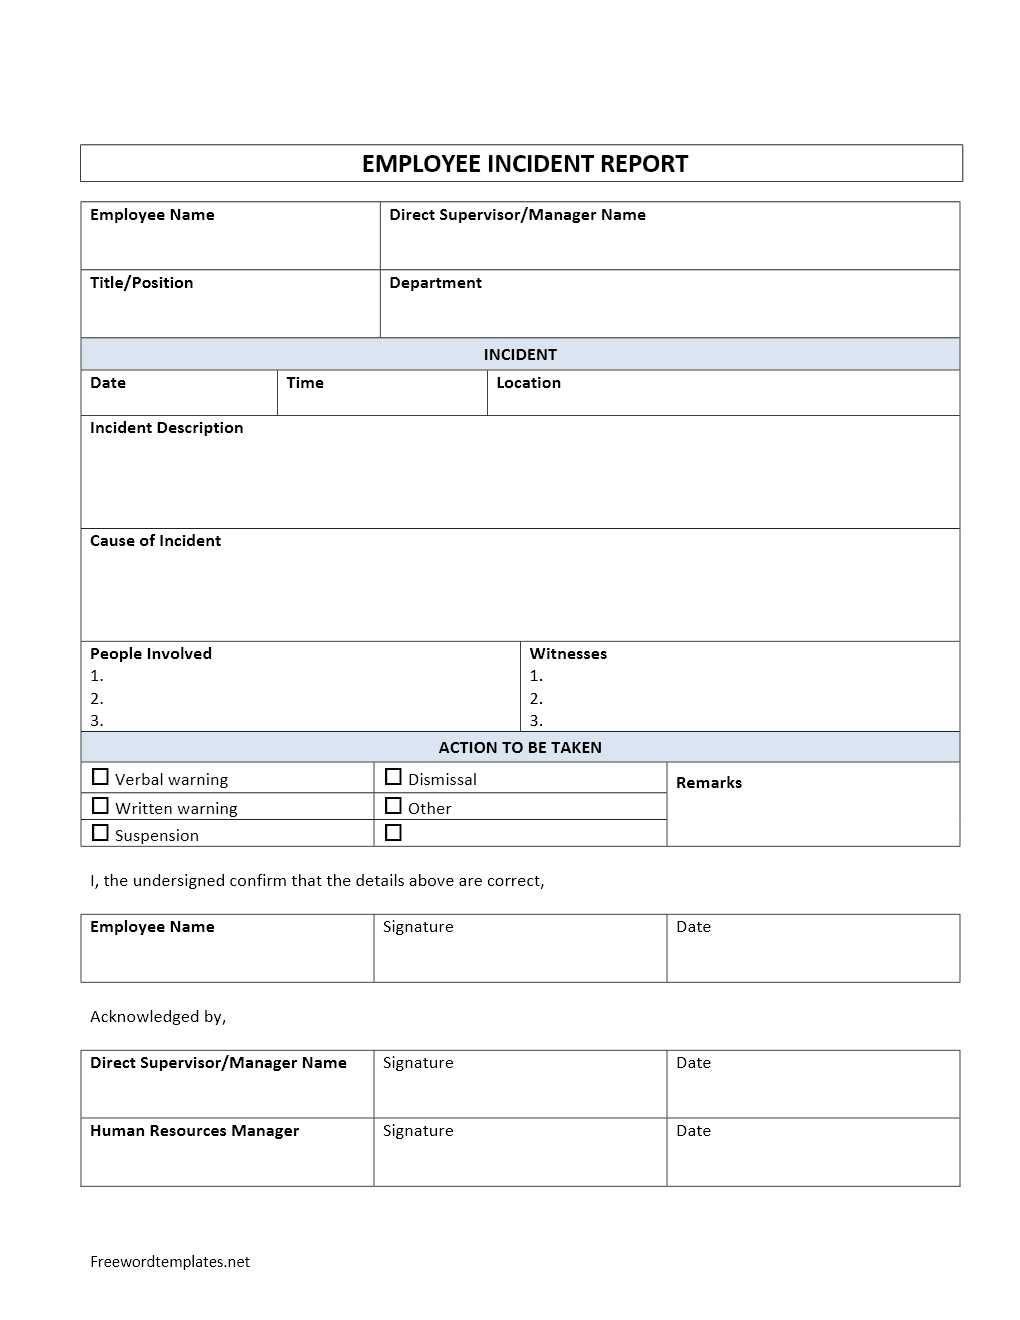 048 Employee Incident Report Template Top Formats Of With Employee Incident Report Templates